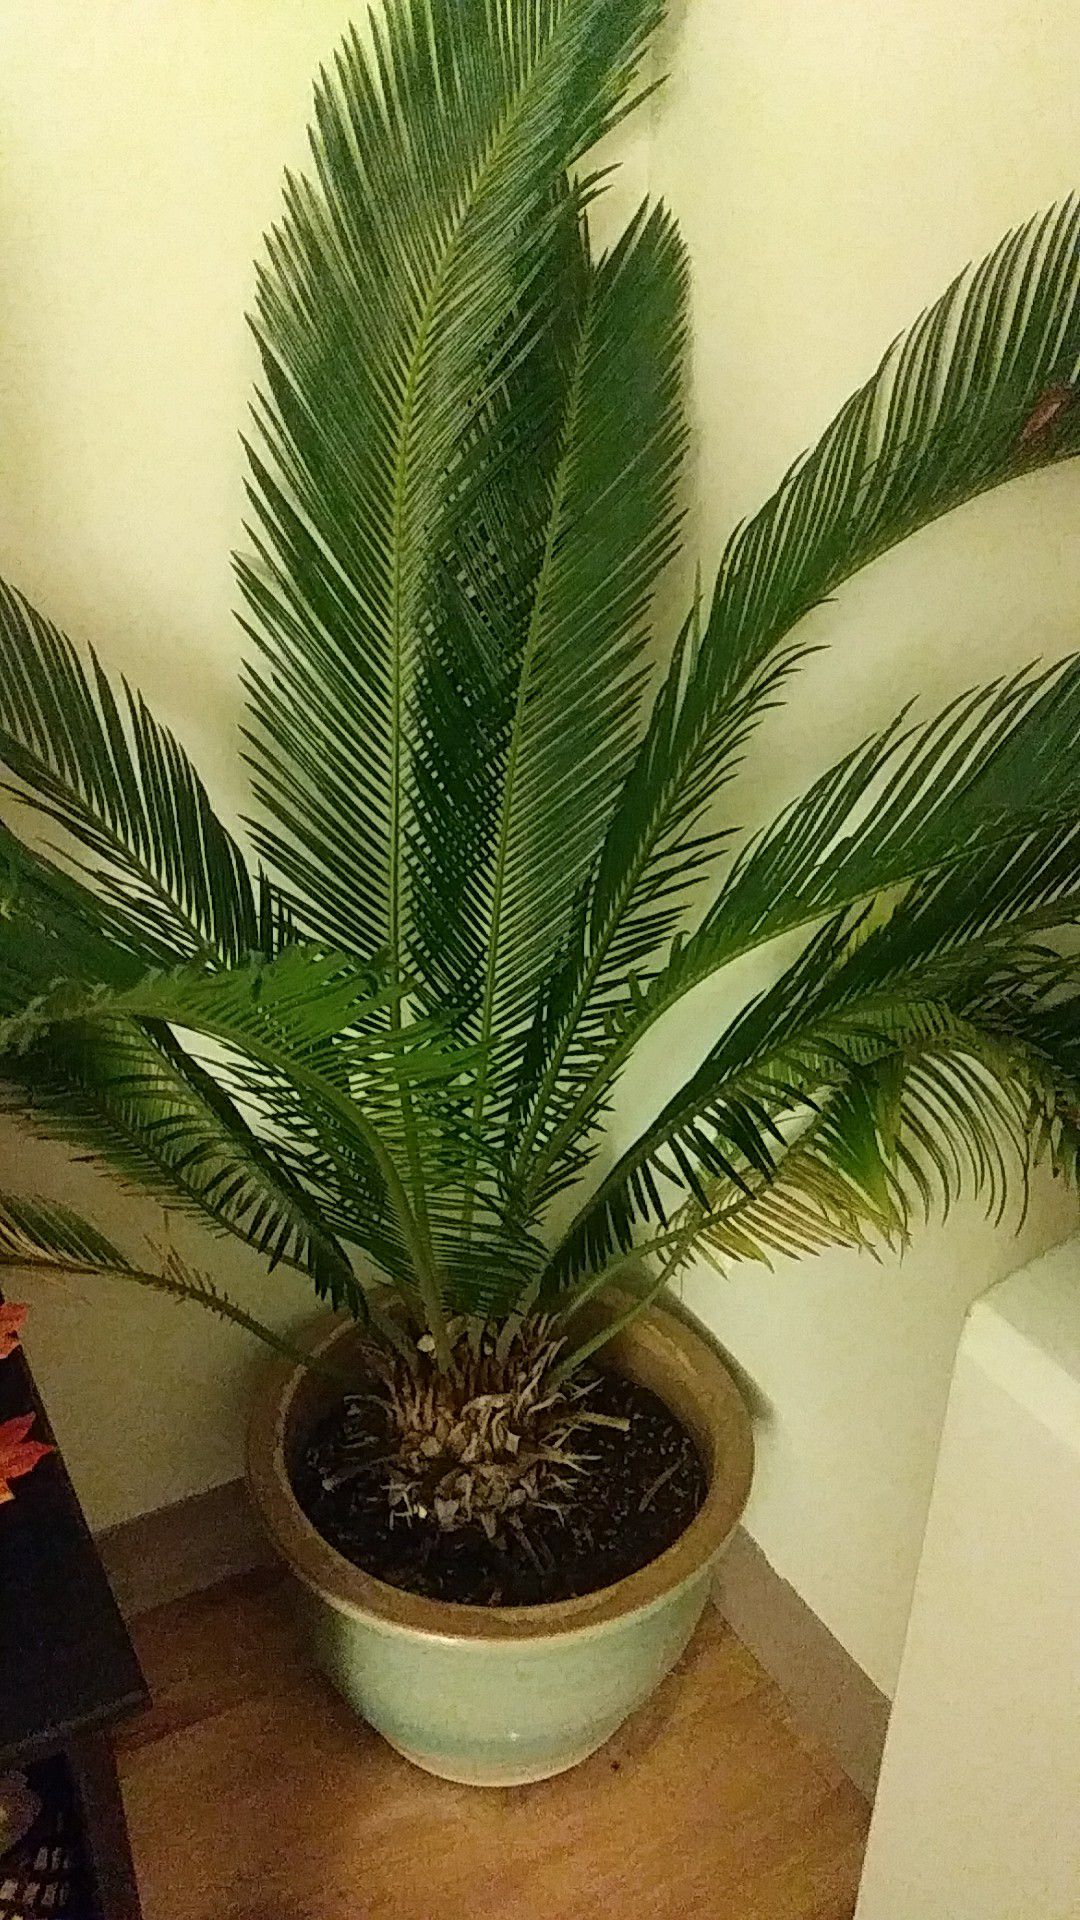 Large fern plant